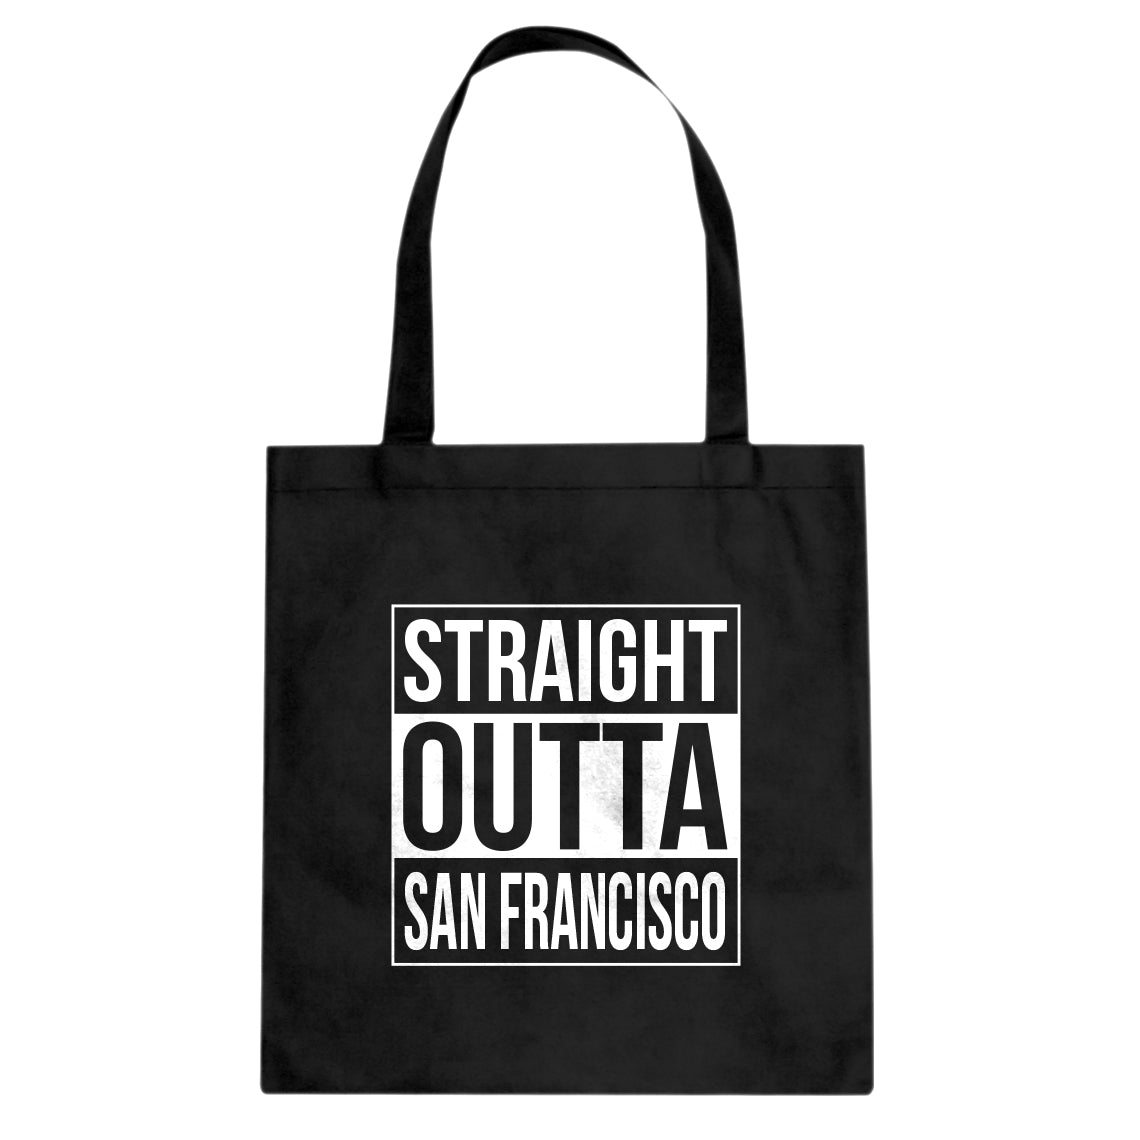 Straight Outta San Francisco Cotton Canvas Tote Bag